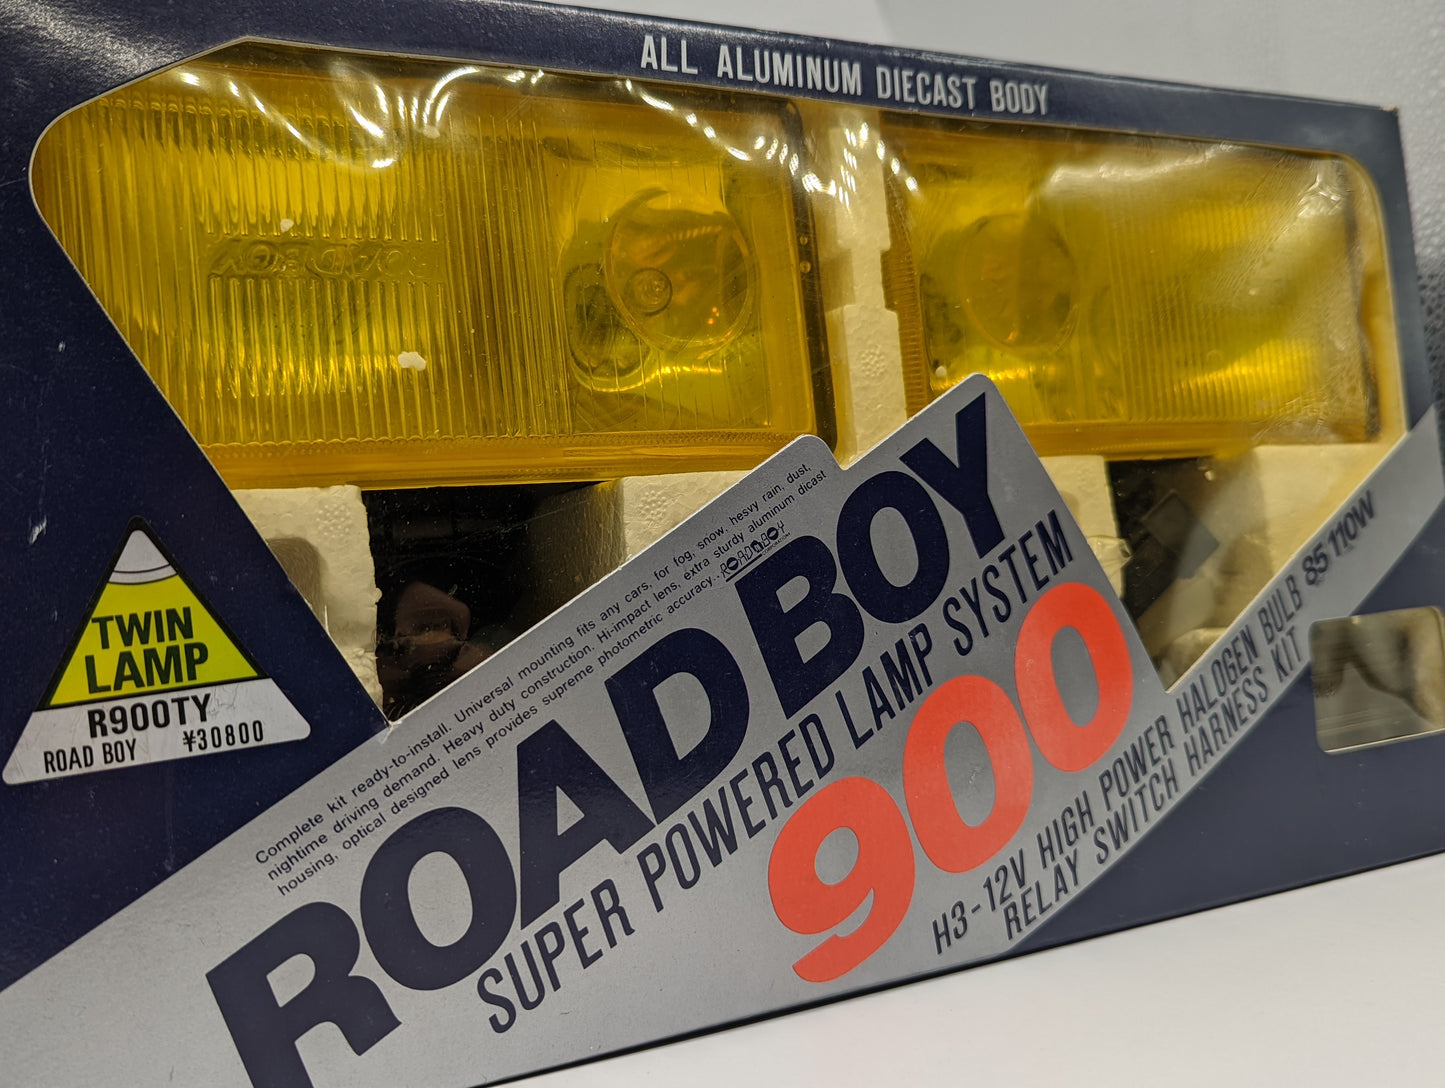 Road boy 9000 yellow fog light kit